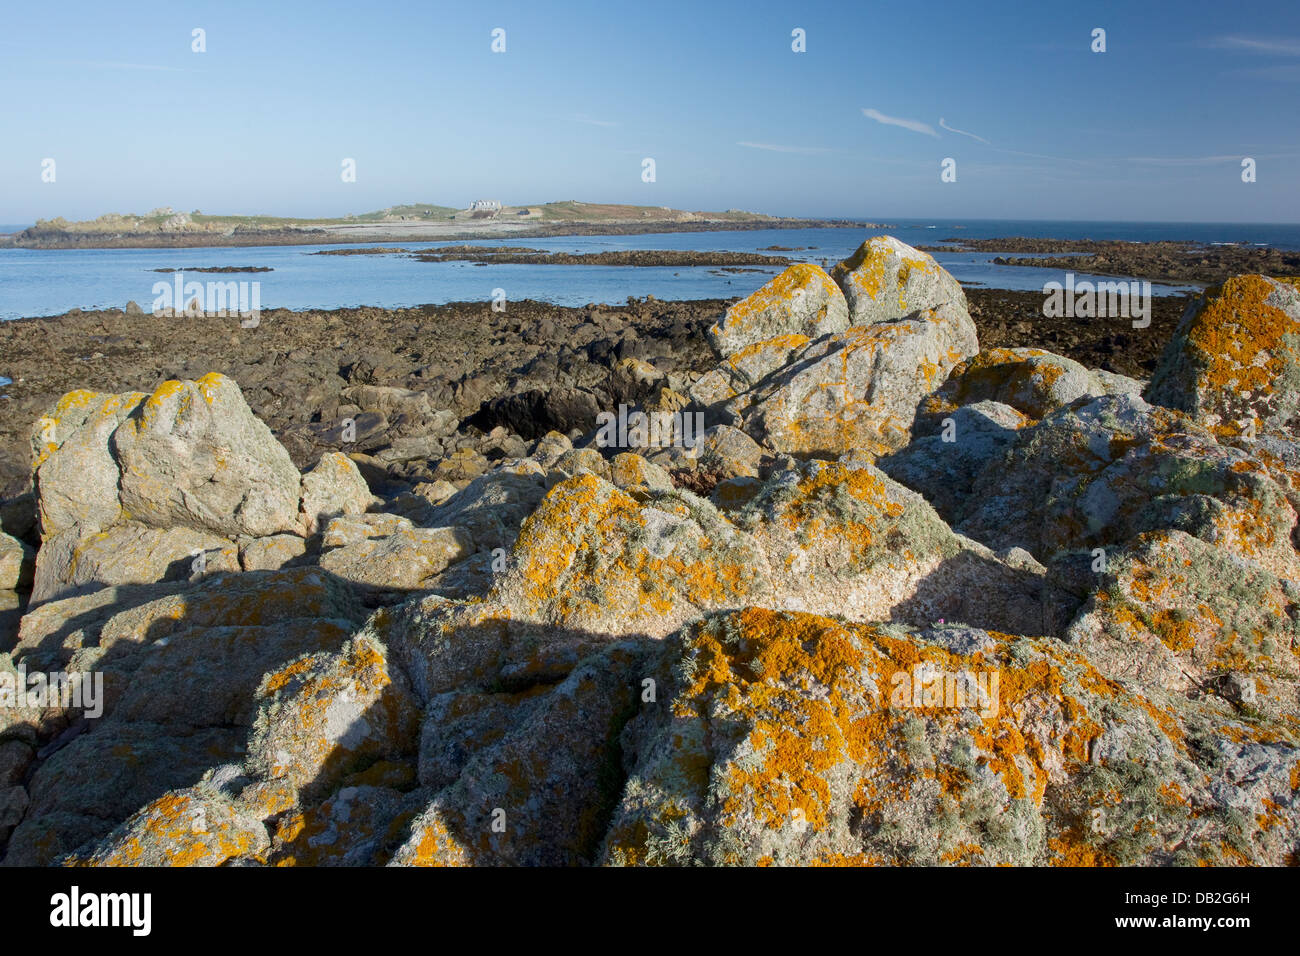 View of Lihou Island Guernsey Channel Islands, UK LA005912 Stock Photo